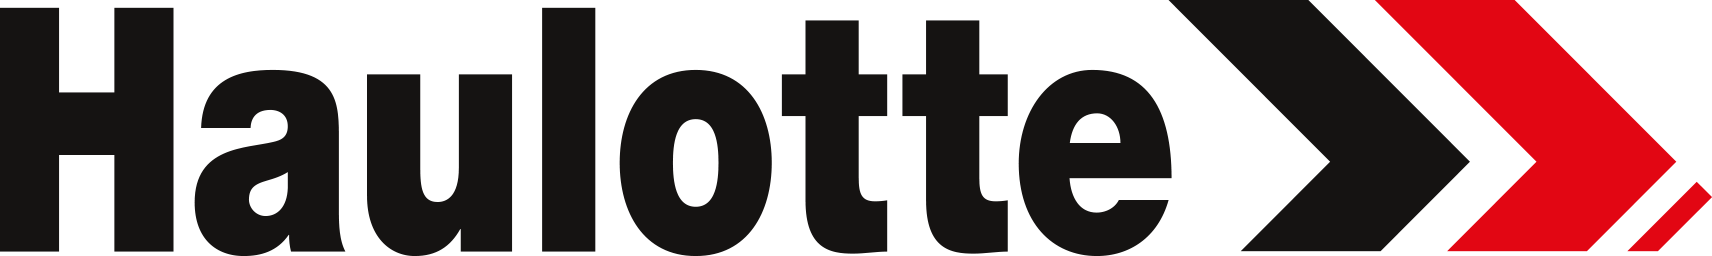 haulotte_logo